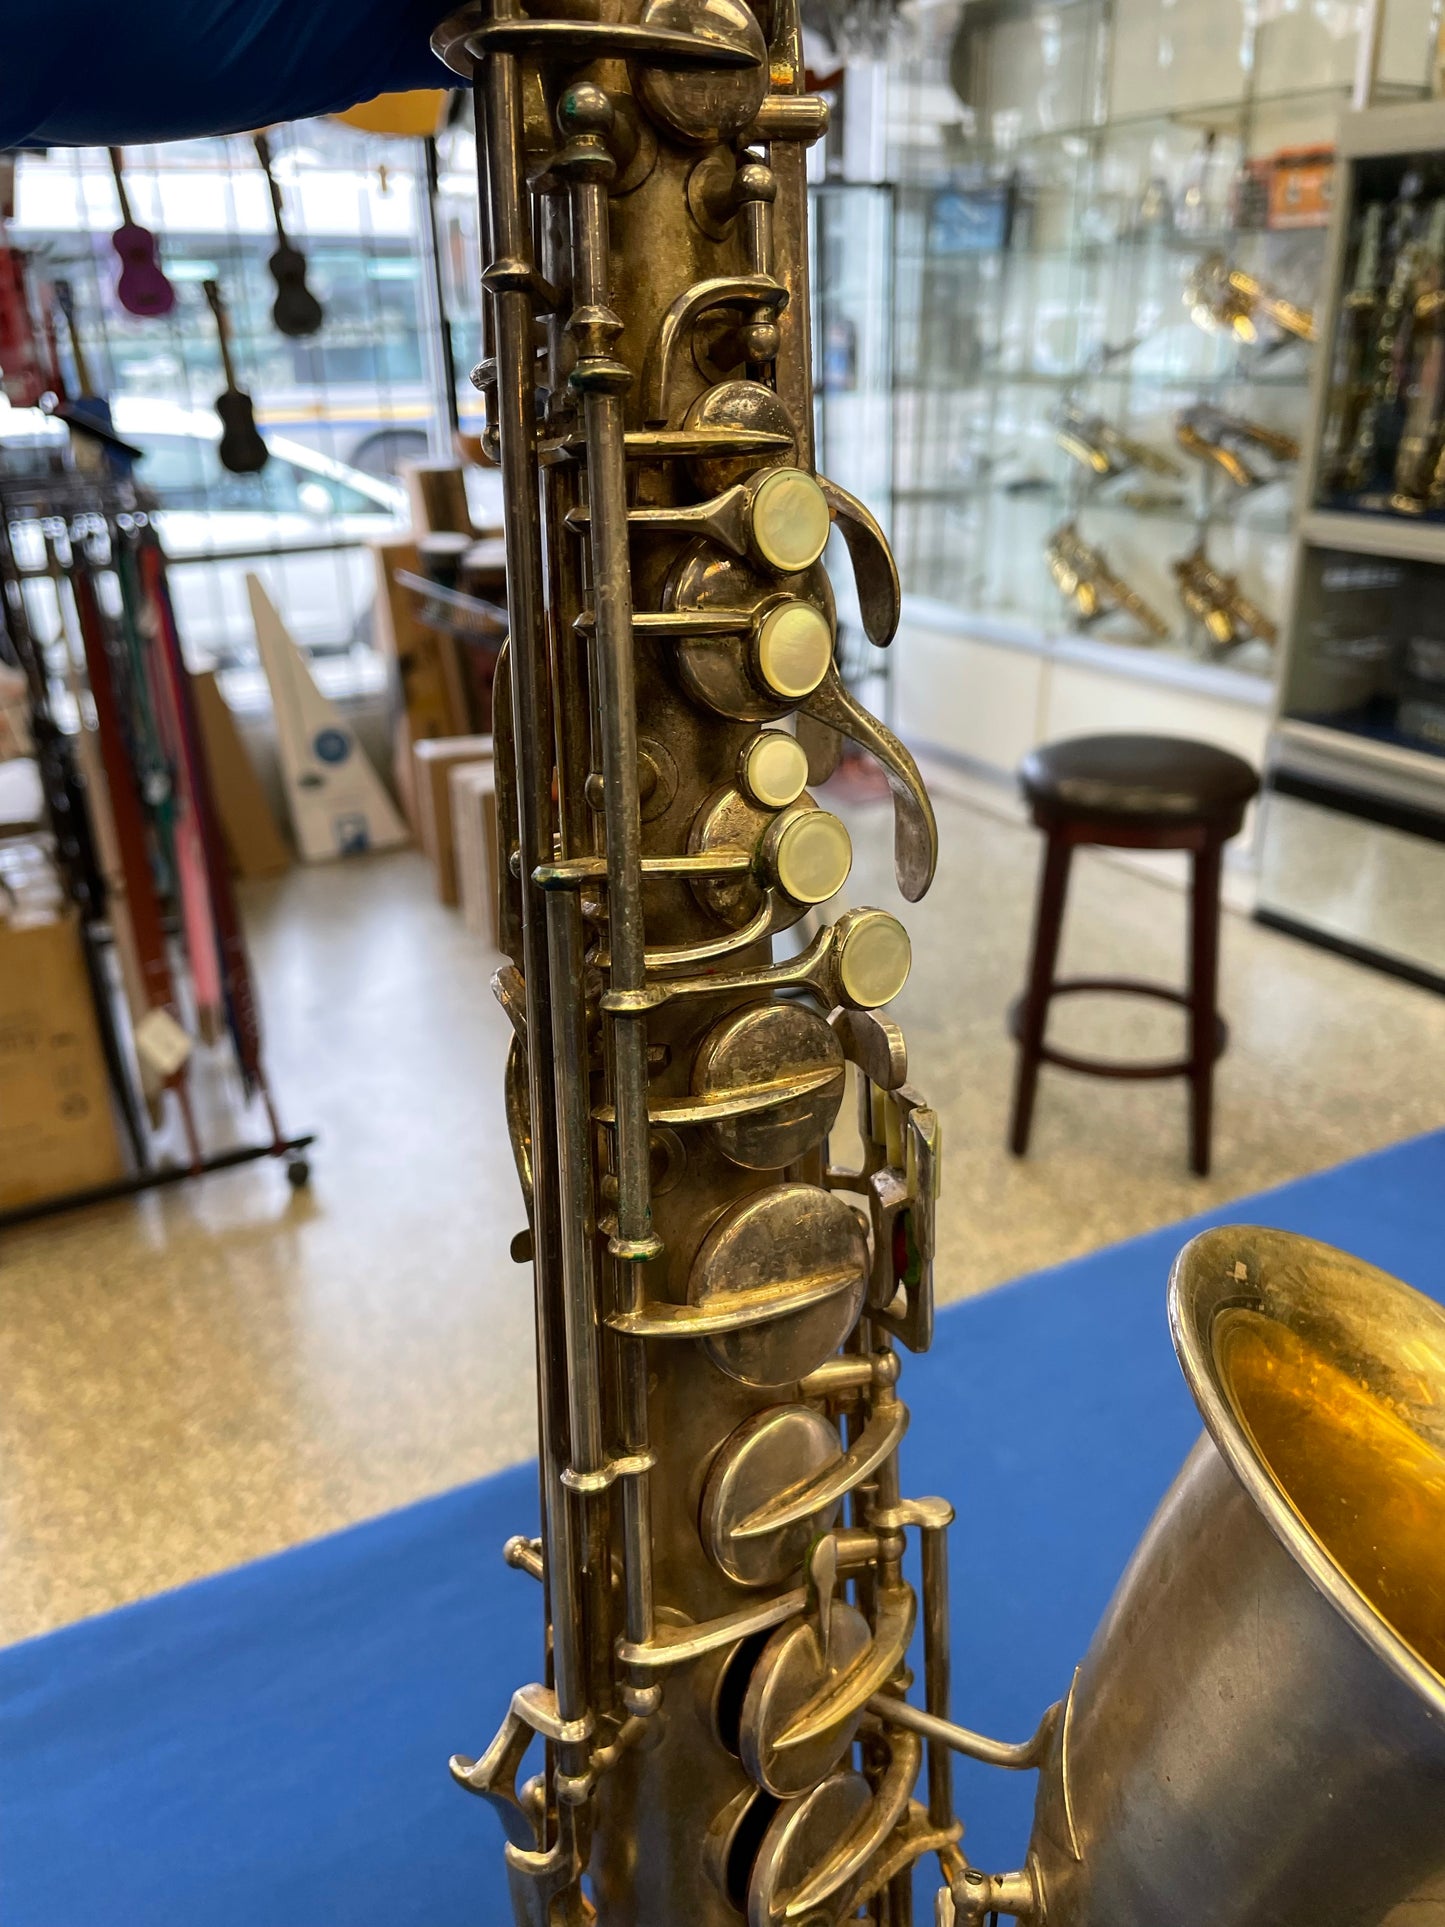 Pre-Owned Conn Alto Saxophone